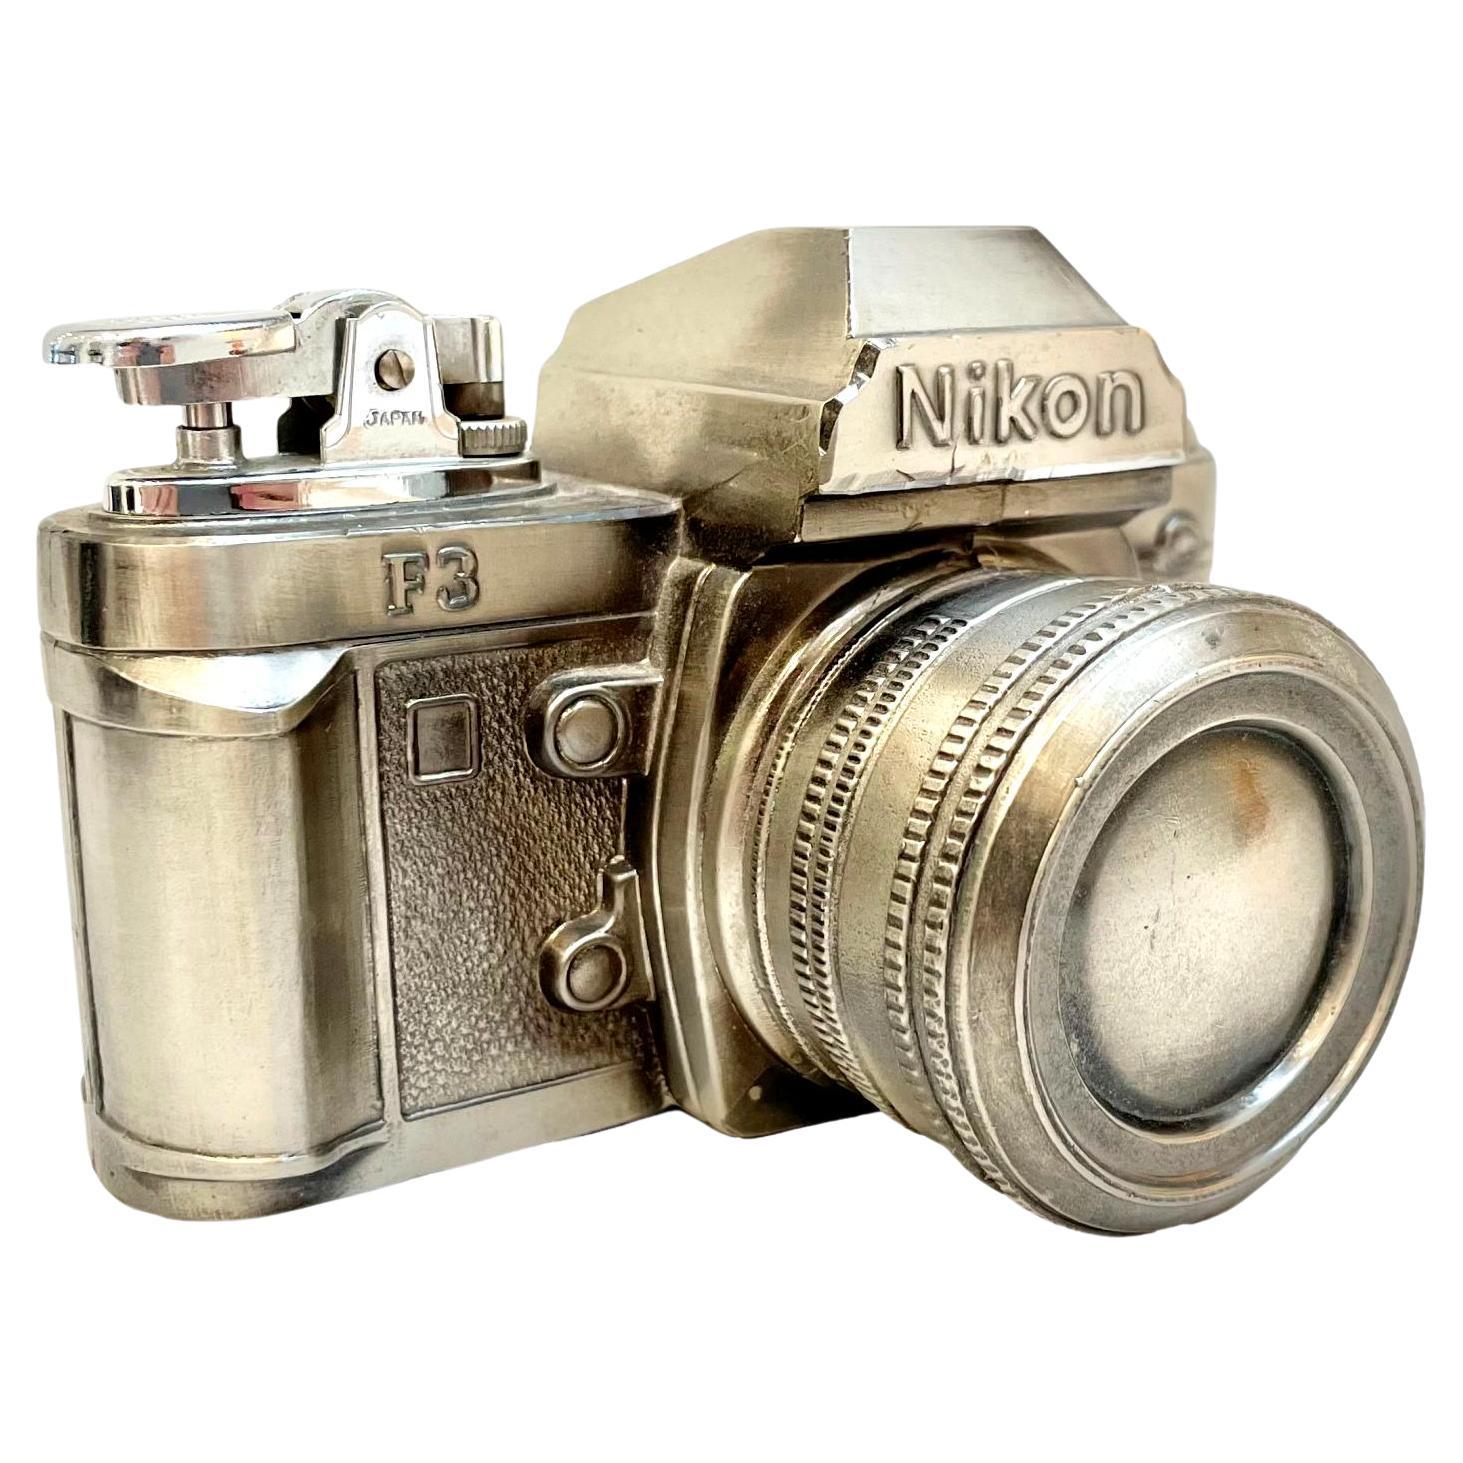 Nikon Kamera-Feuerzeug, 1980er Jahre Japan